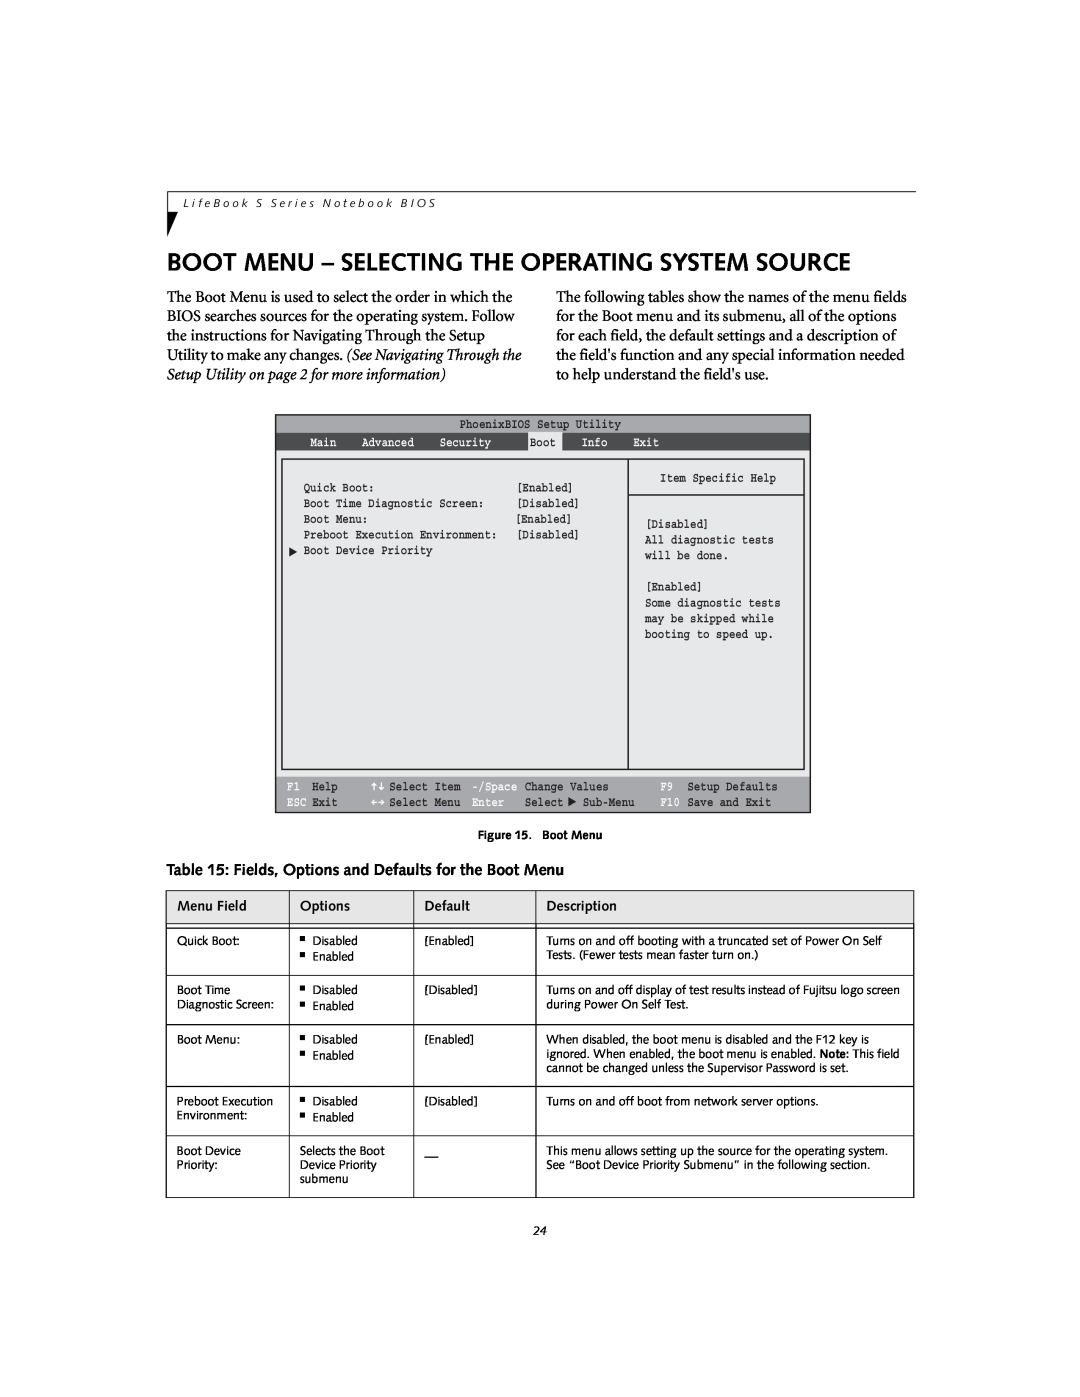 Fujitsu Siemens Computers S2110 manual Boot Menu - Selecting The Operating System Source 